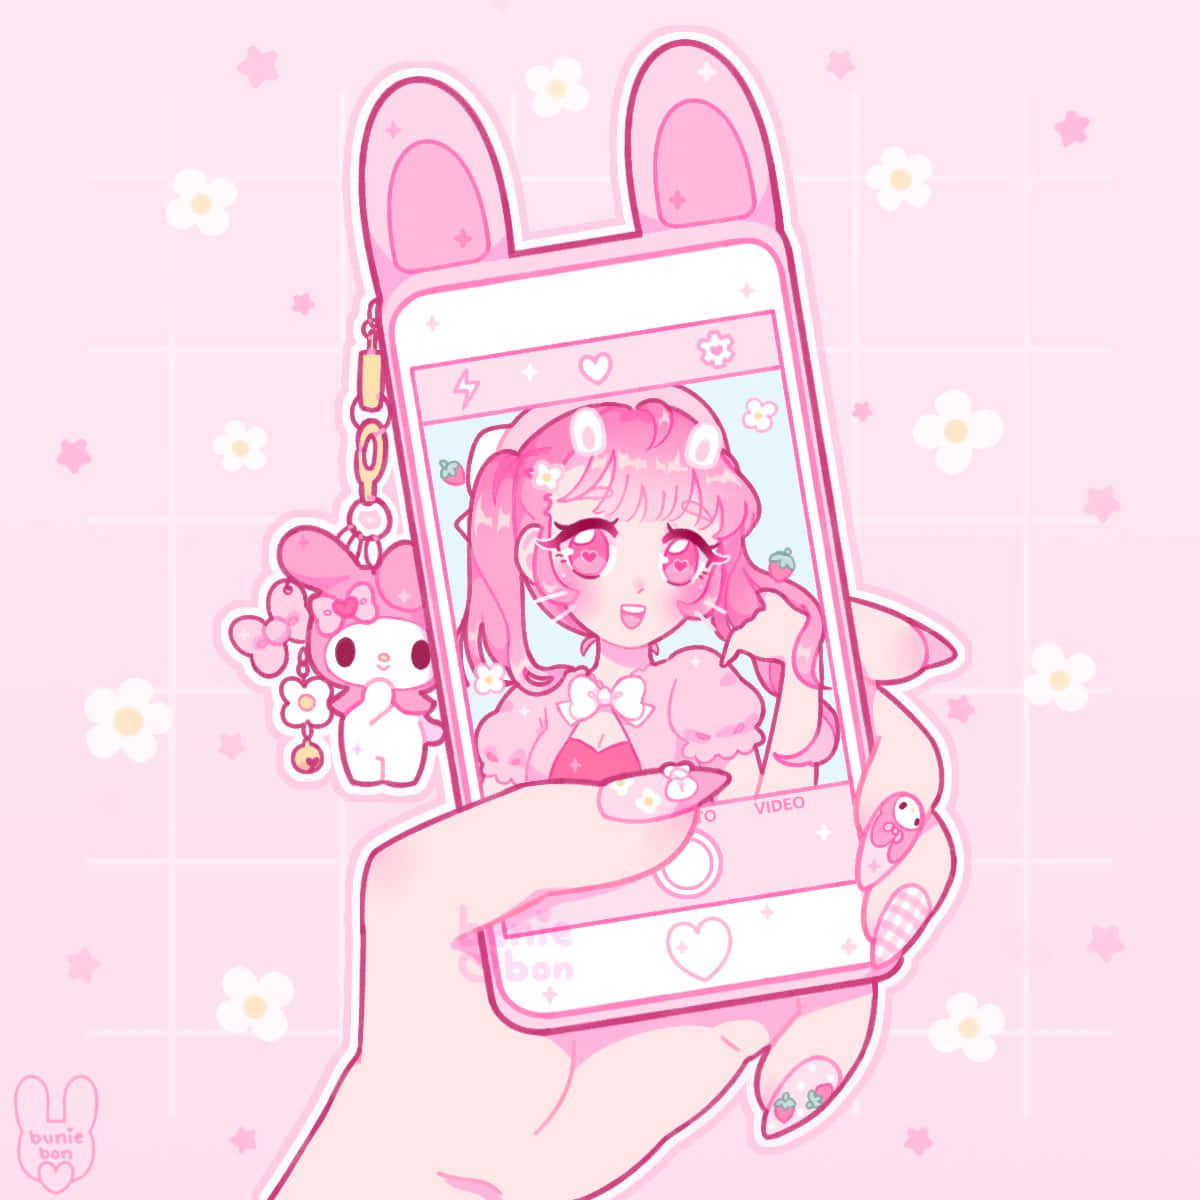 En hånd holder en pink telefon med et pink kanin på det. Wallpaper